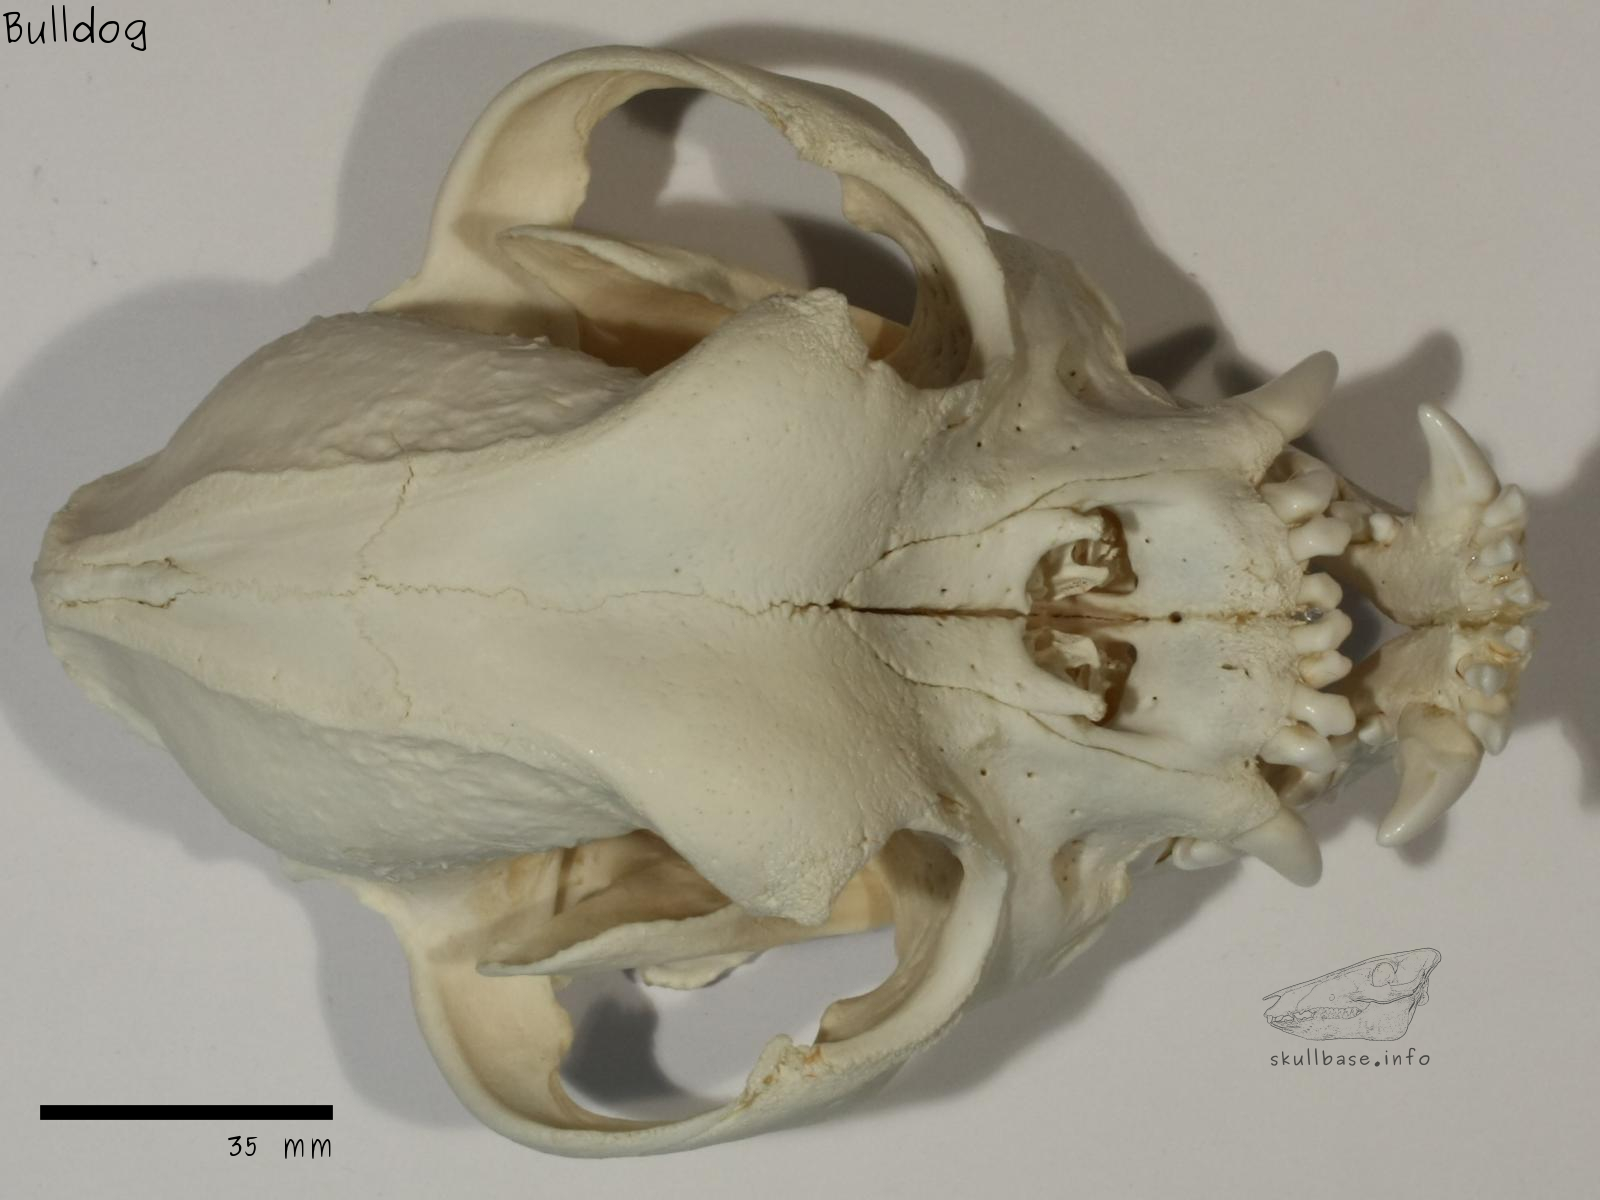 Bulldog (Canis lupus familiaris) skull dorsal view